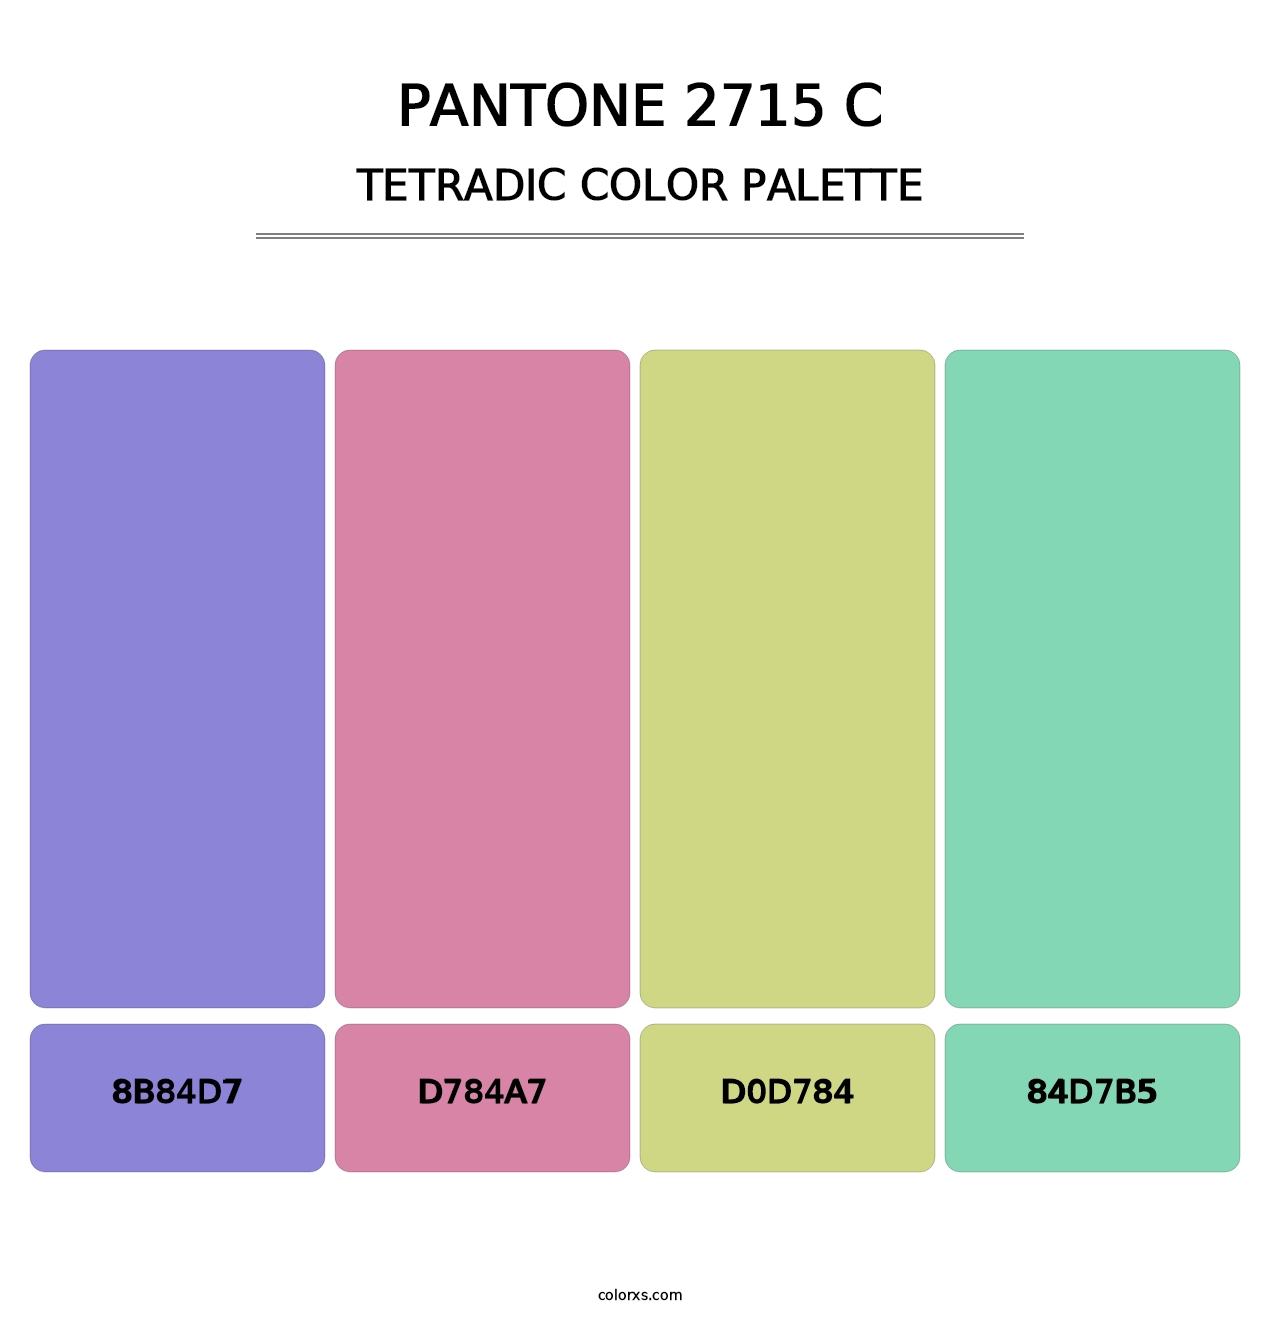 PANTONE 2715 C - Tetradic Color Palette